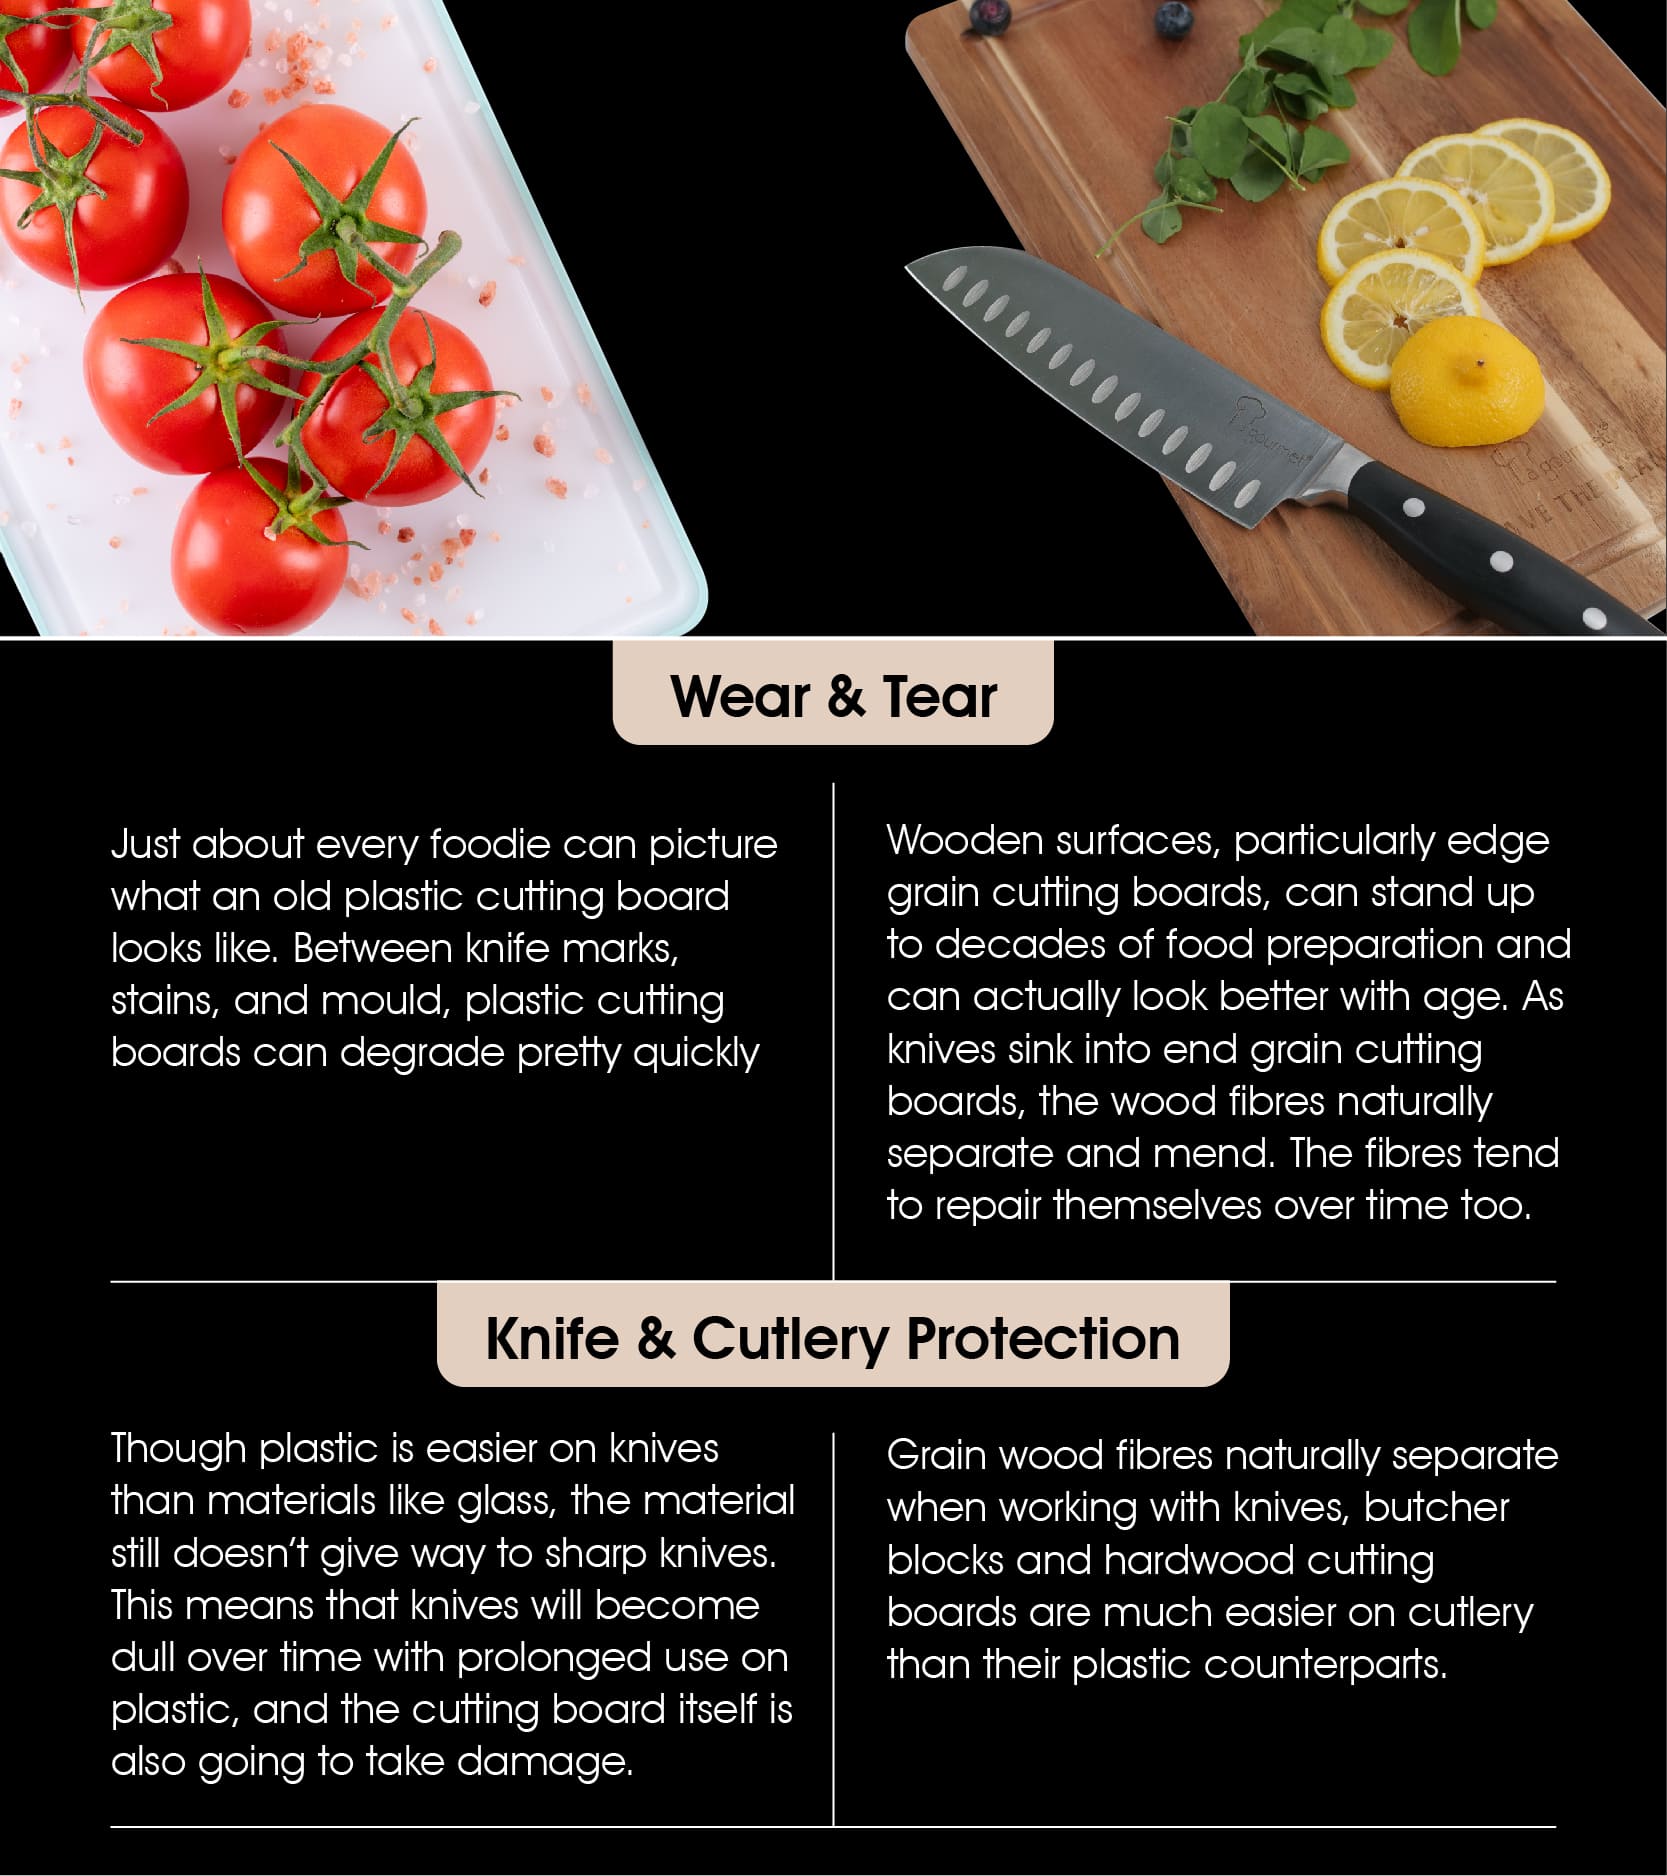 Kitchen Tools Cutting Board - La gourmet® Malaysia